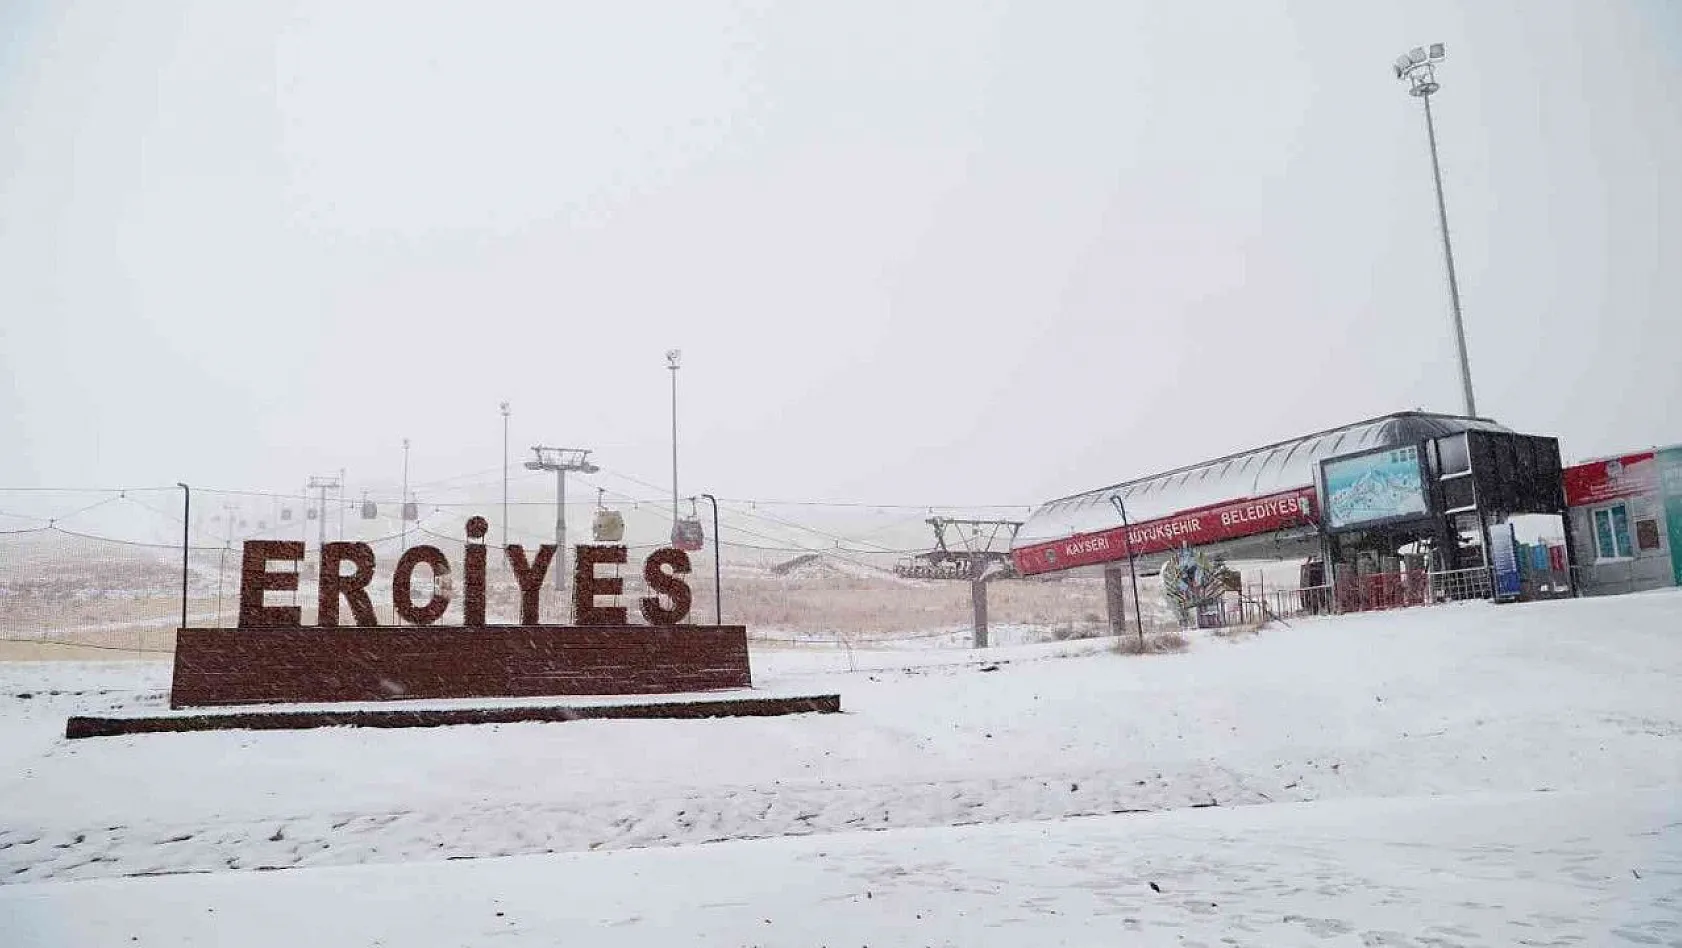 Erciyes'e lapa lapa kar yağdı